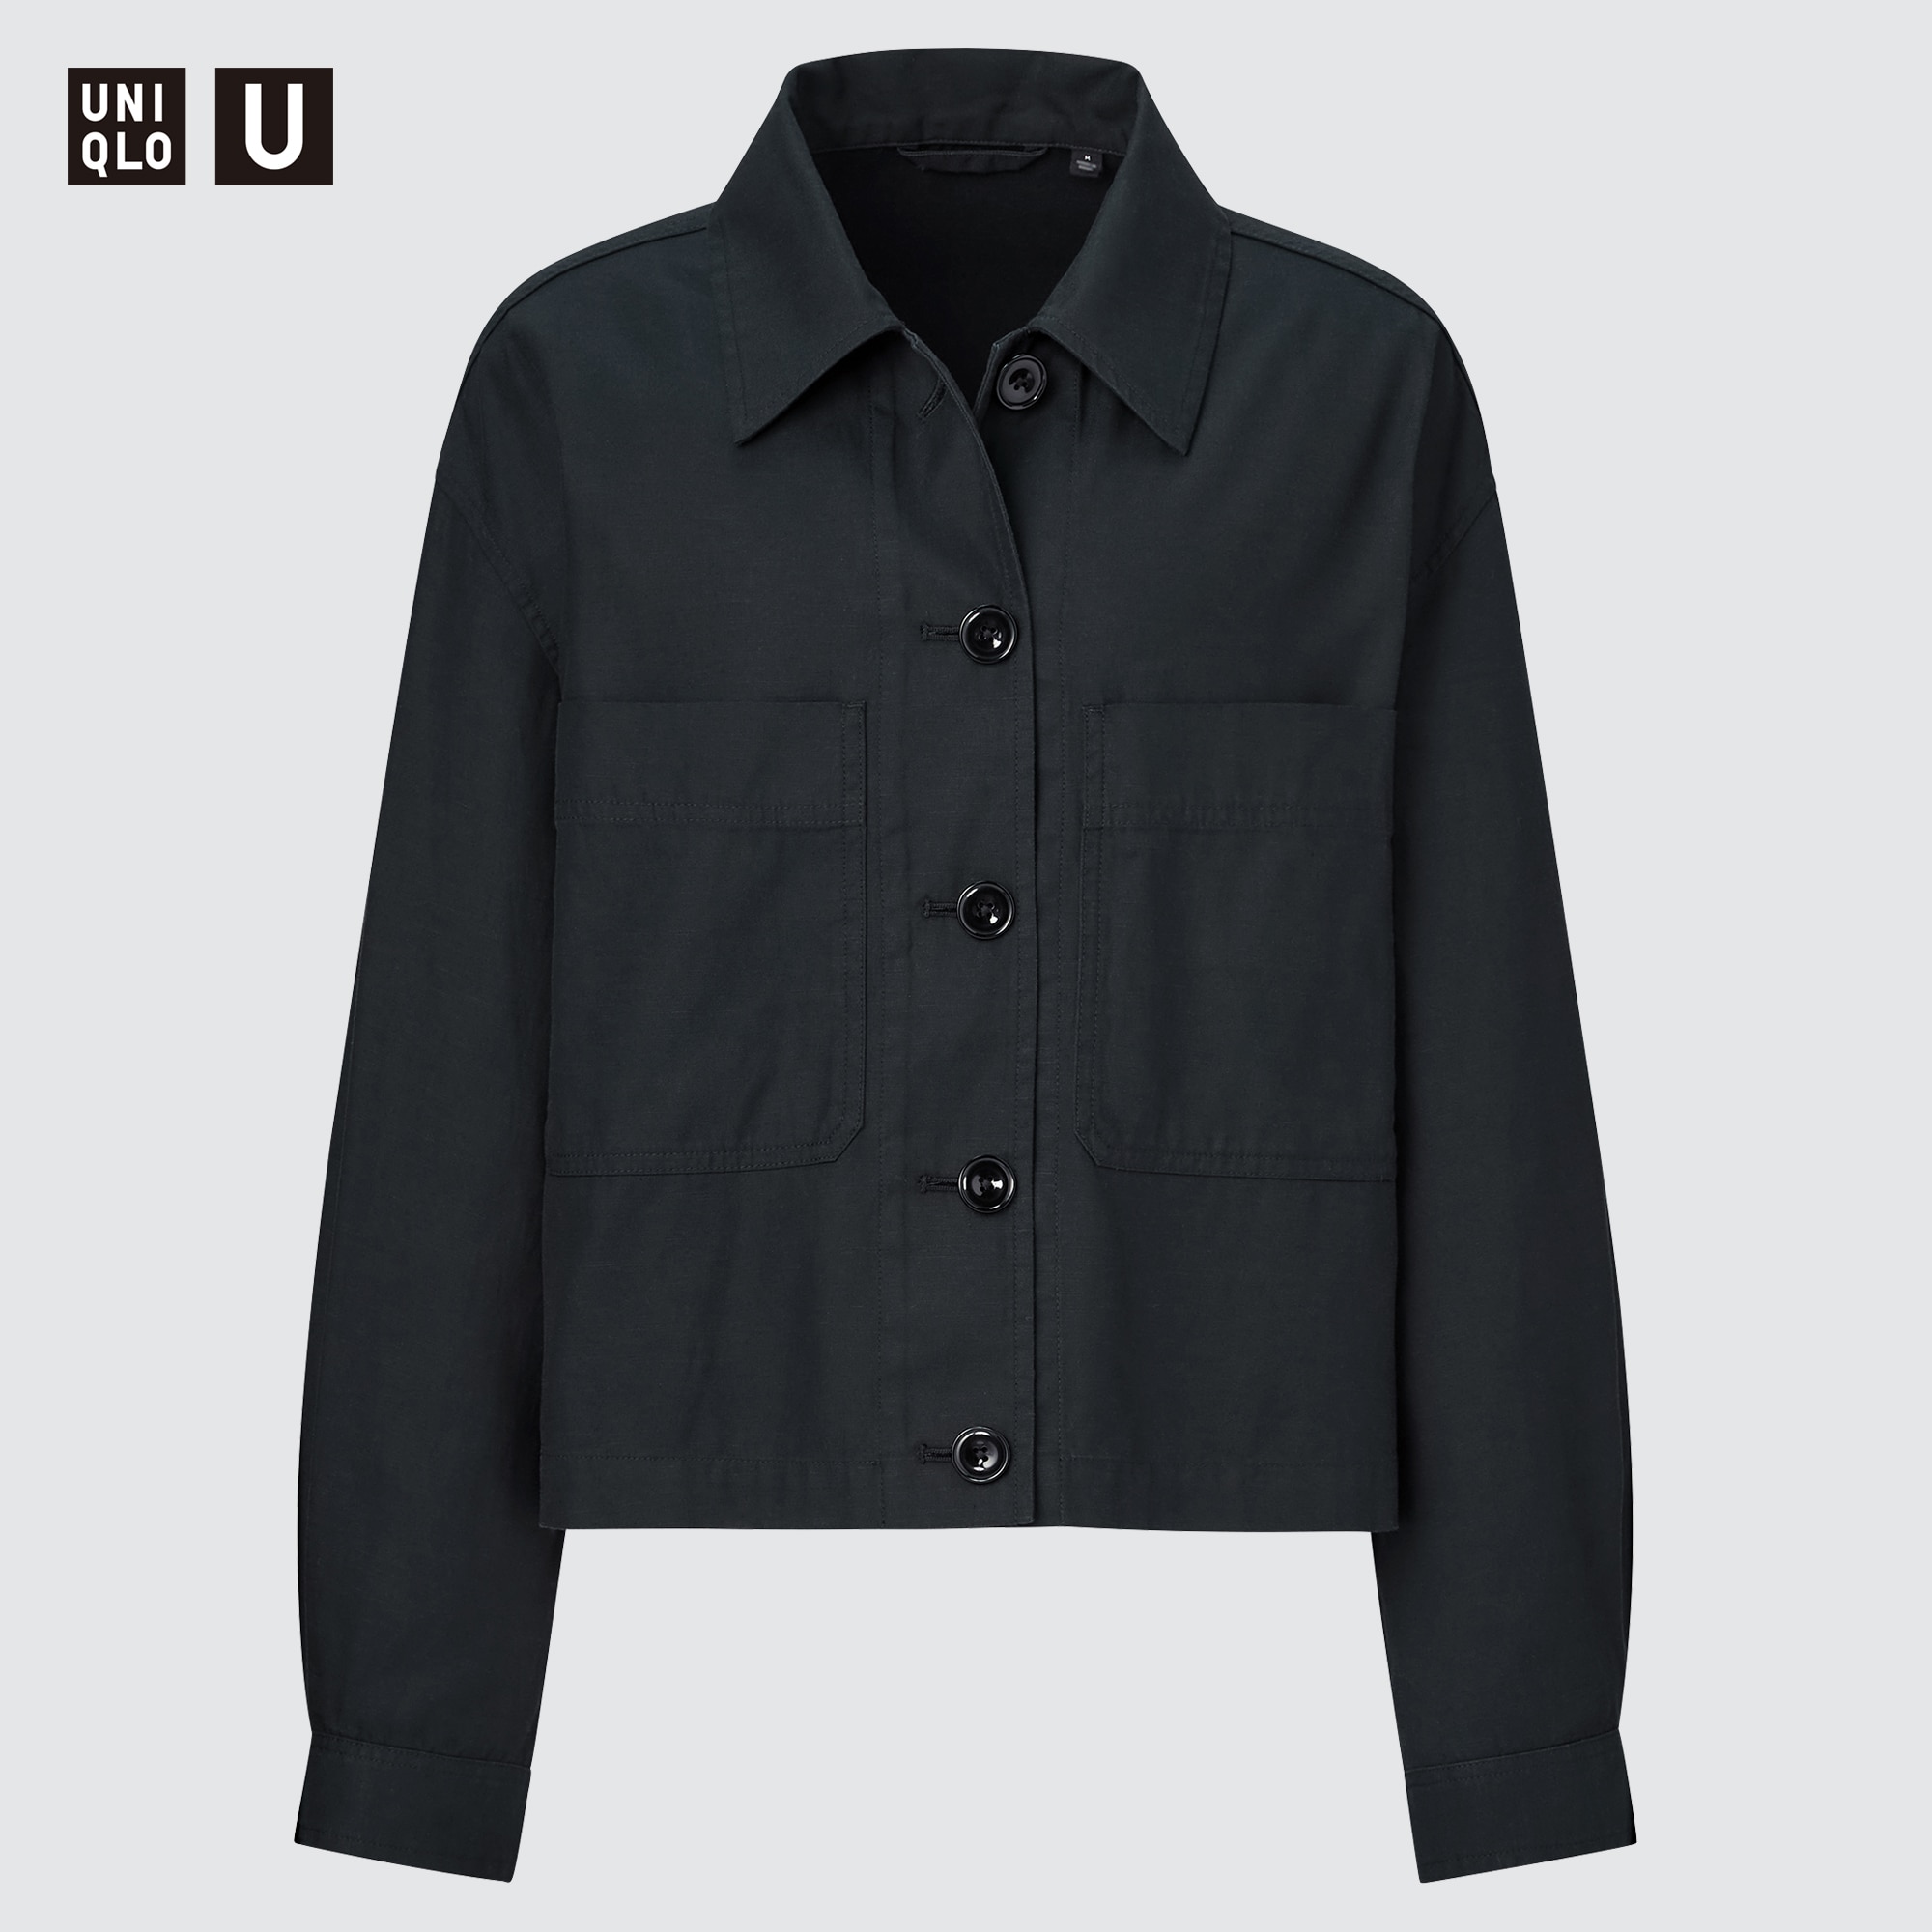 Uniqlo Windbreaker Jacket Hooded Water Resistant Breathable Black Size XS   eBay